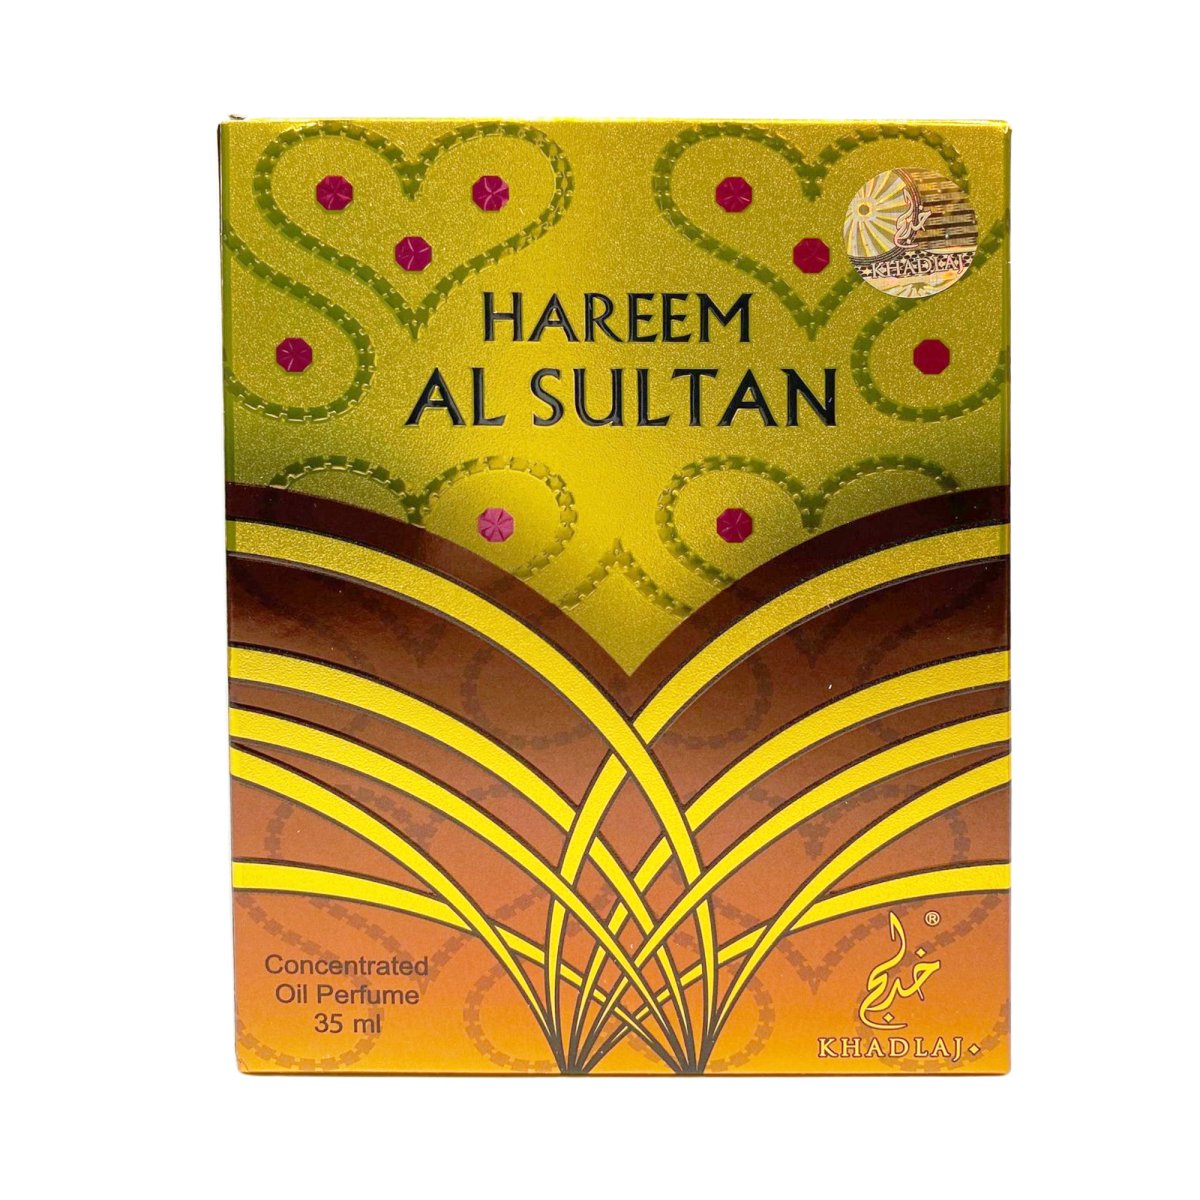 Hareem Al Sultan concentrated Perfum Oil 35 Ml by Khadlaj - Khadlaj - Fragrance